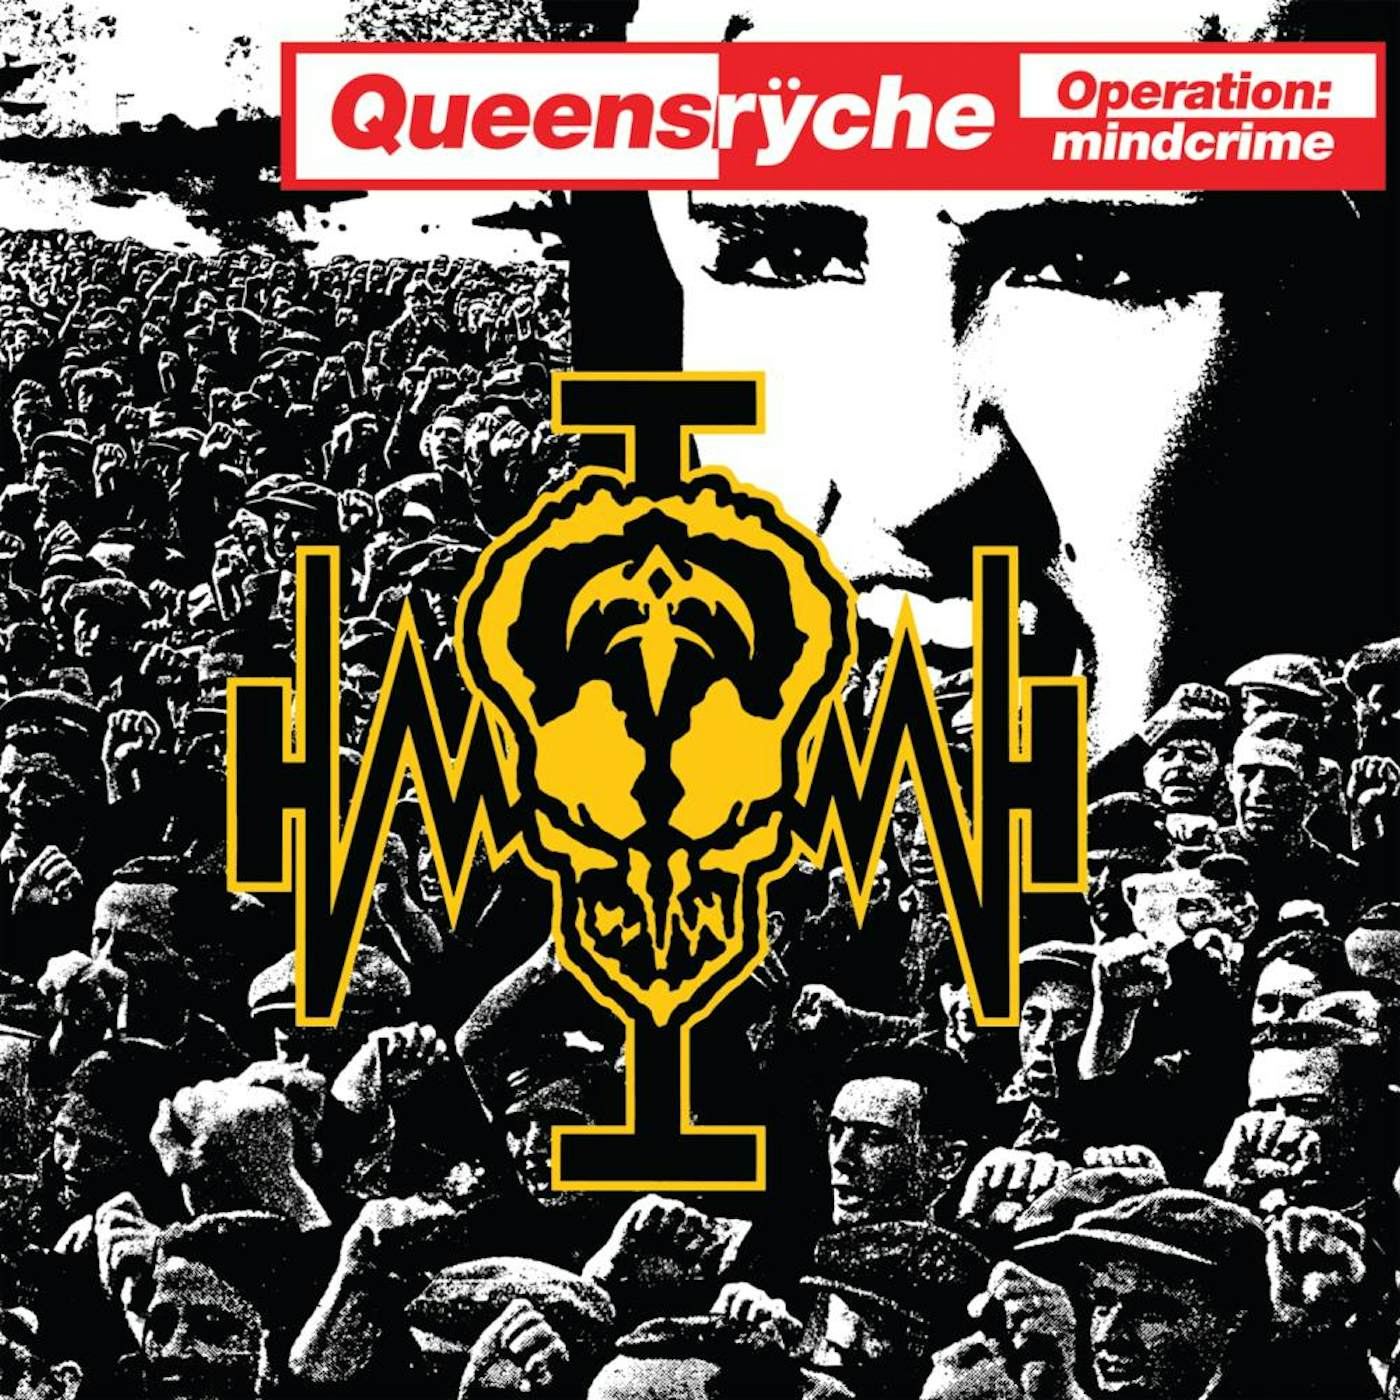 Queensrÿche OPERATION: MINDCRIME CD